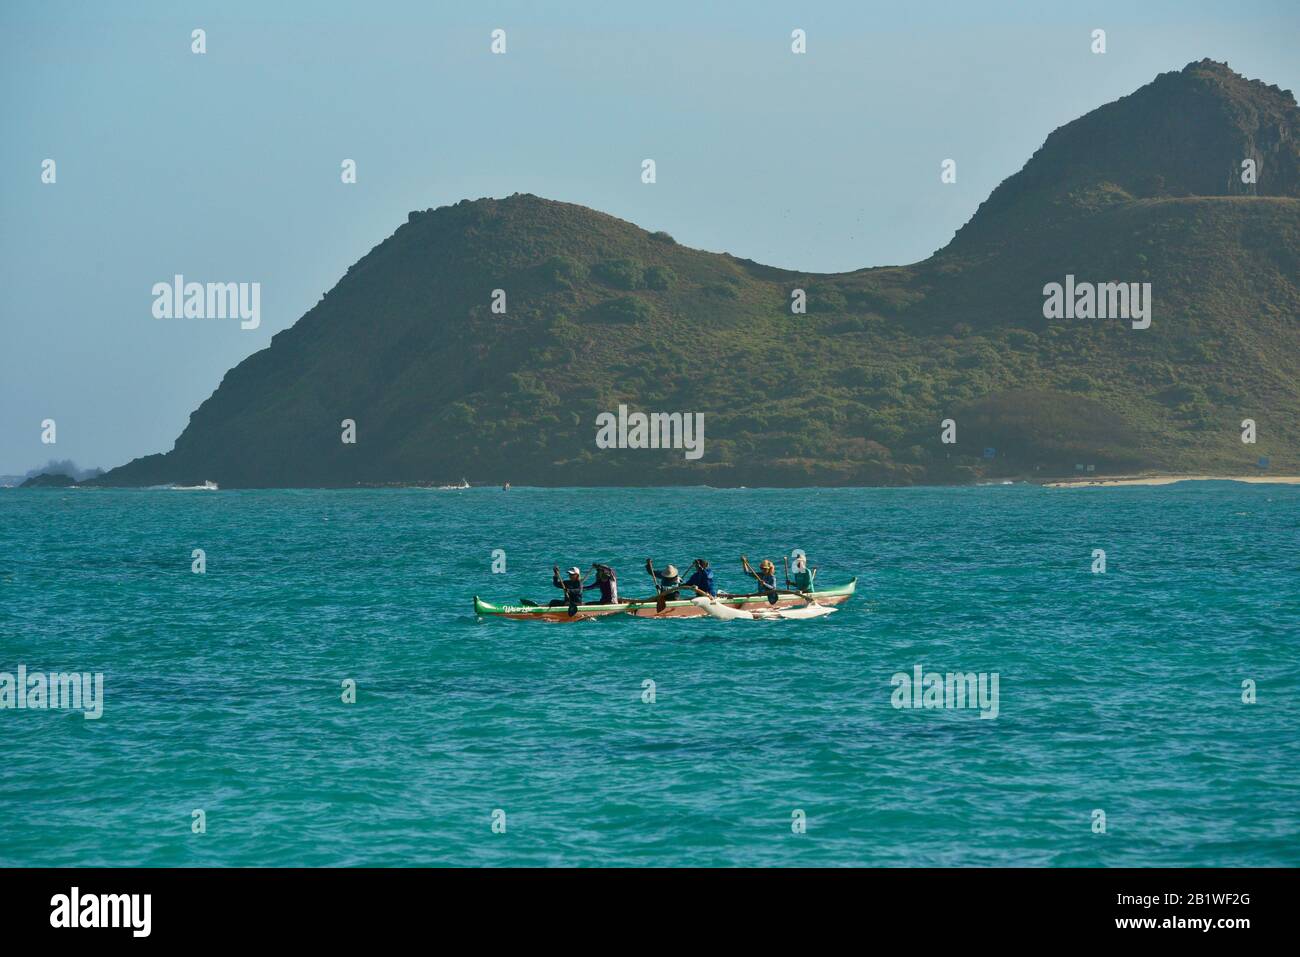 People paddling in outrigger canoe in turquoise waters off Lanikai Beach, Moku Nui island behind (part of Mokulua Islands), Oahu, Kailua, Hawaii, USA Stock Photo